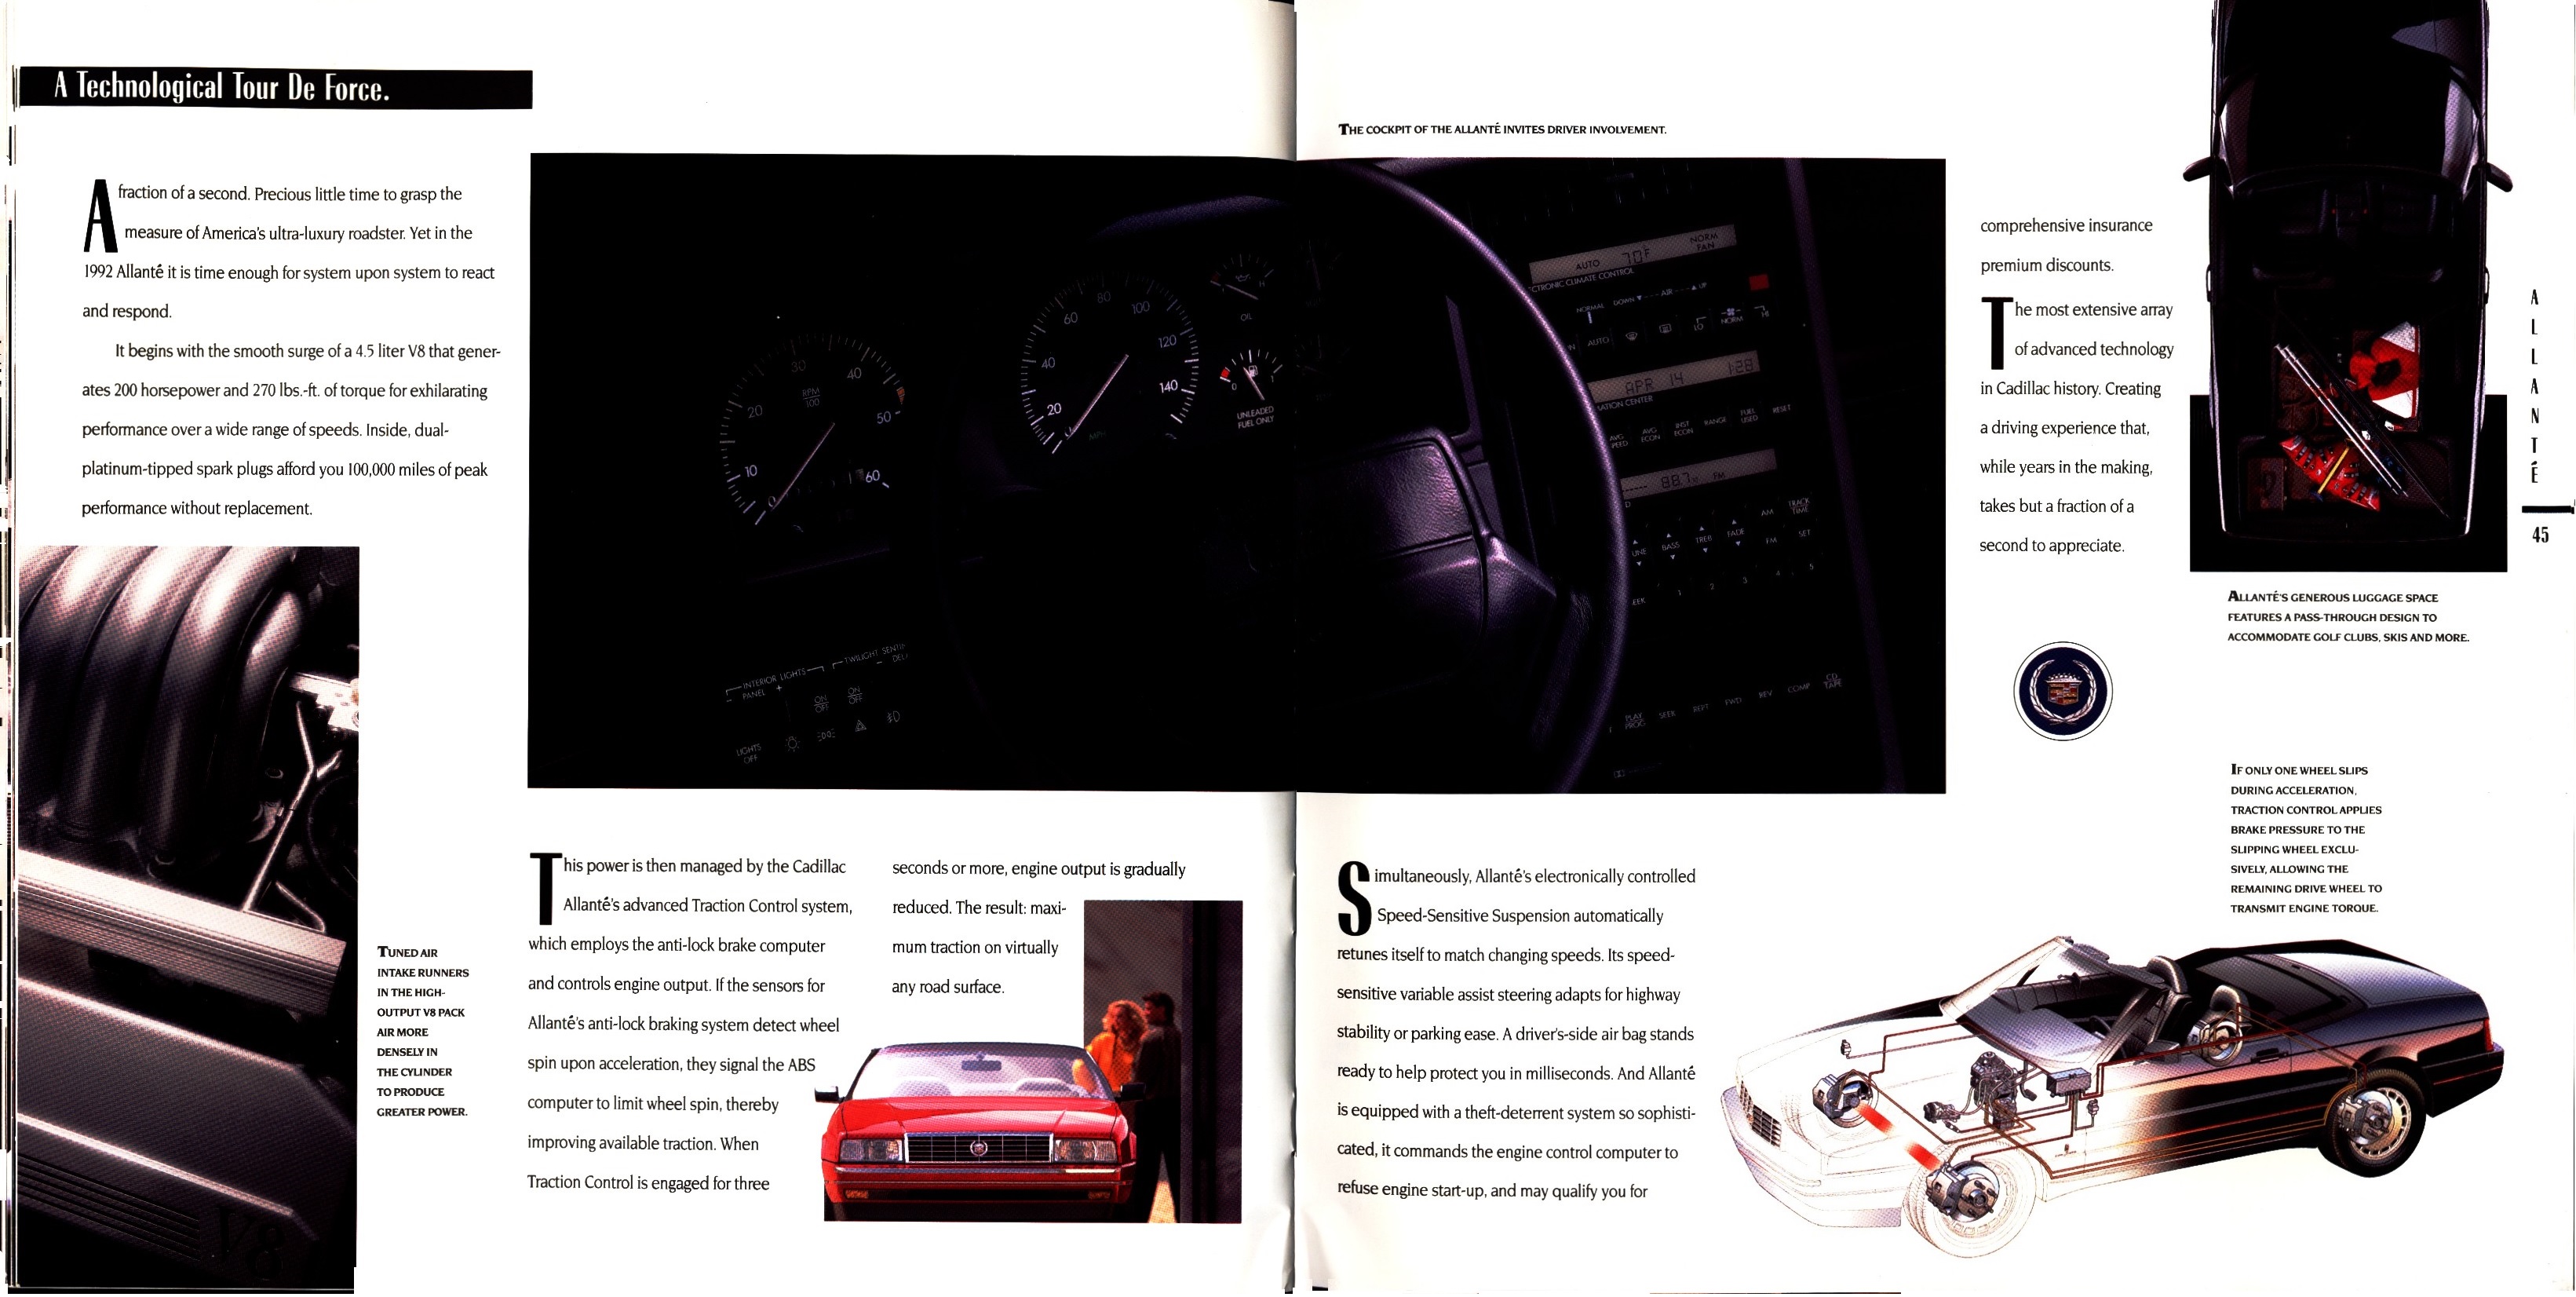 1992 Cadillac Full Line Prestige Brochure 44-45